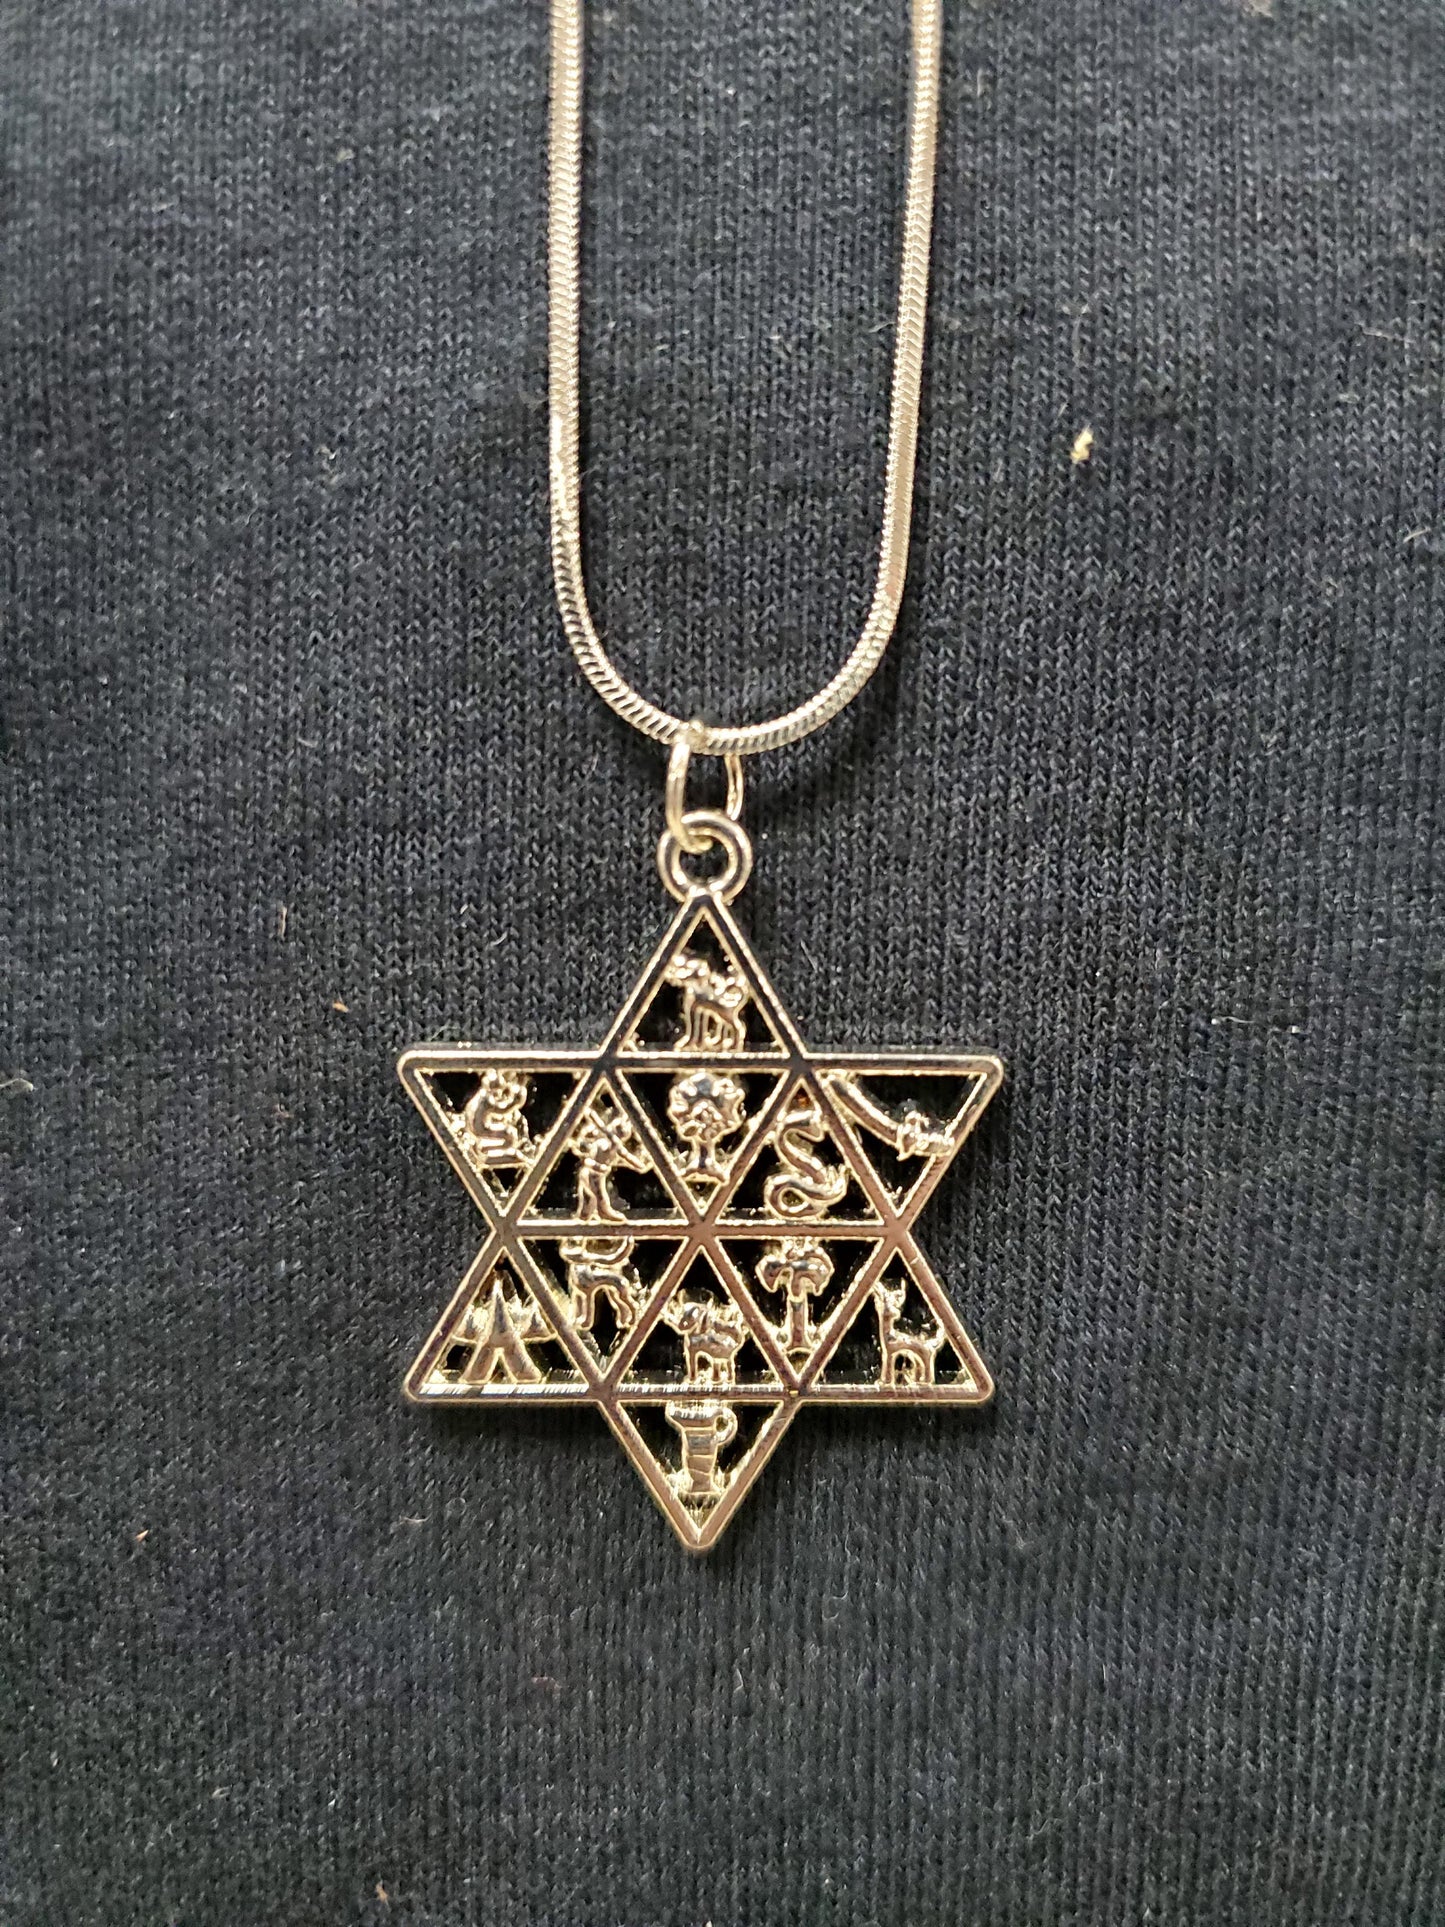 Twelve tribes - Star of David necklace